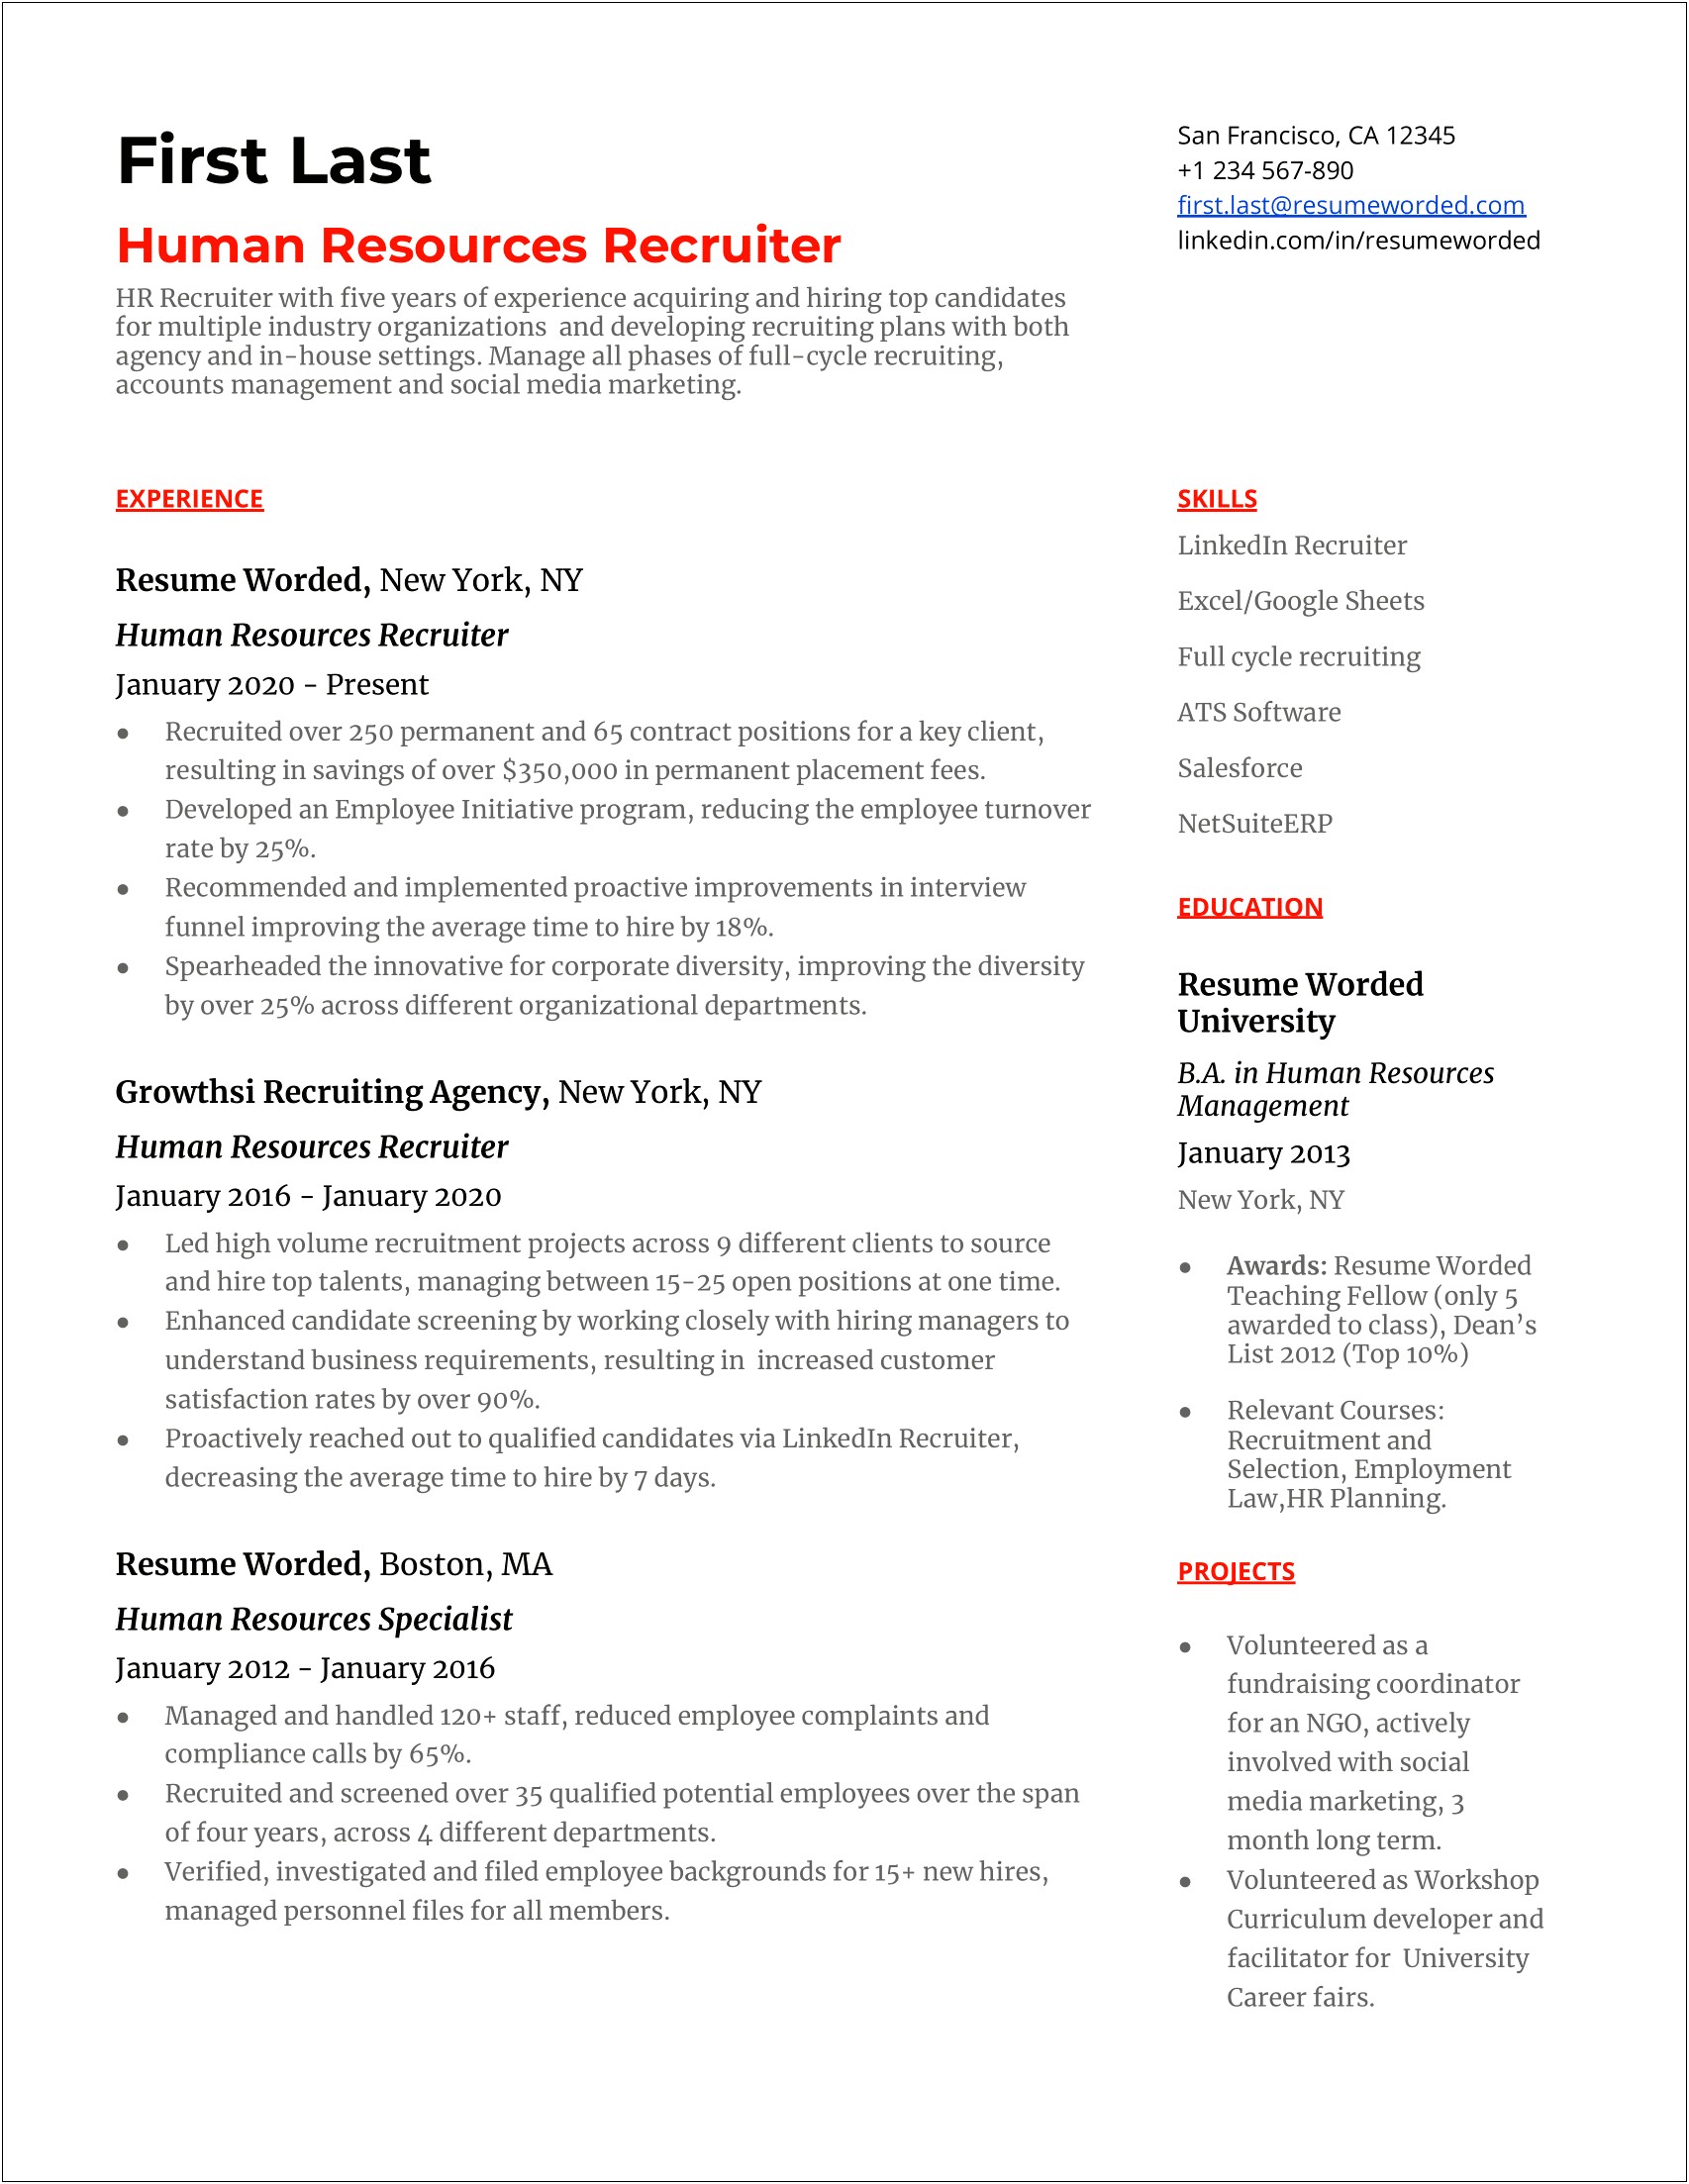 Corporate Recruiter Job Description For Resume